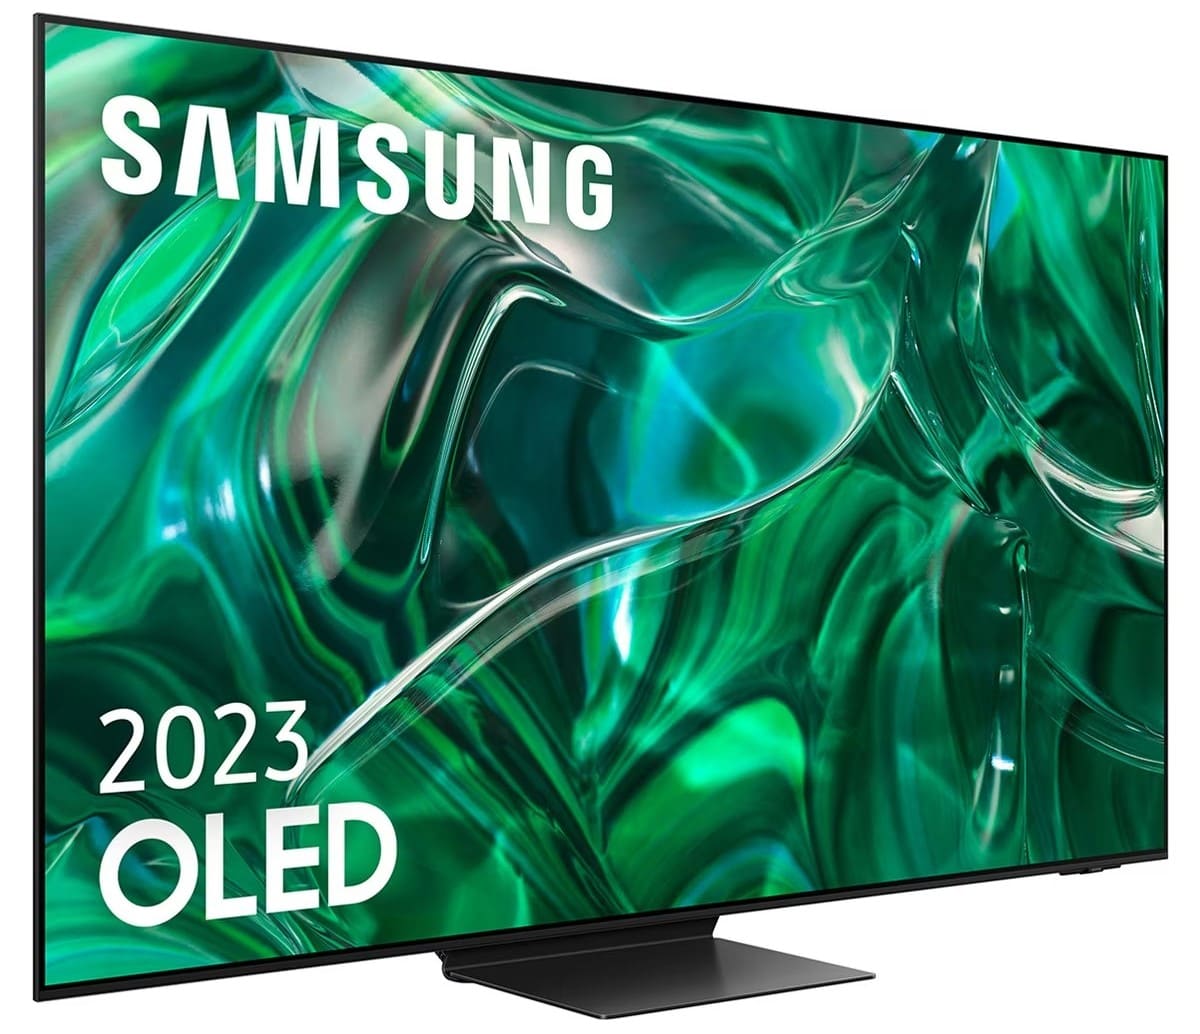 El Corte Ingles TV OLED Samsung Quantum Matrix Technology 4K